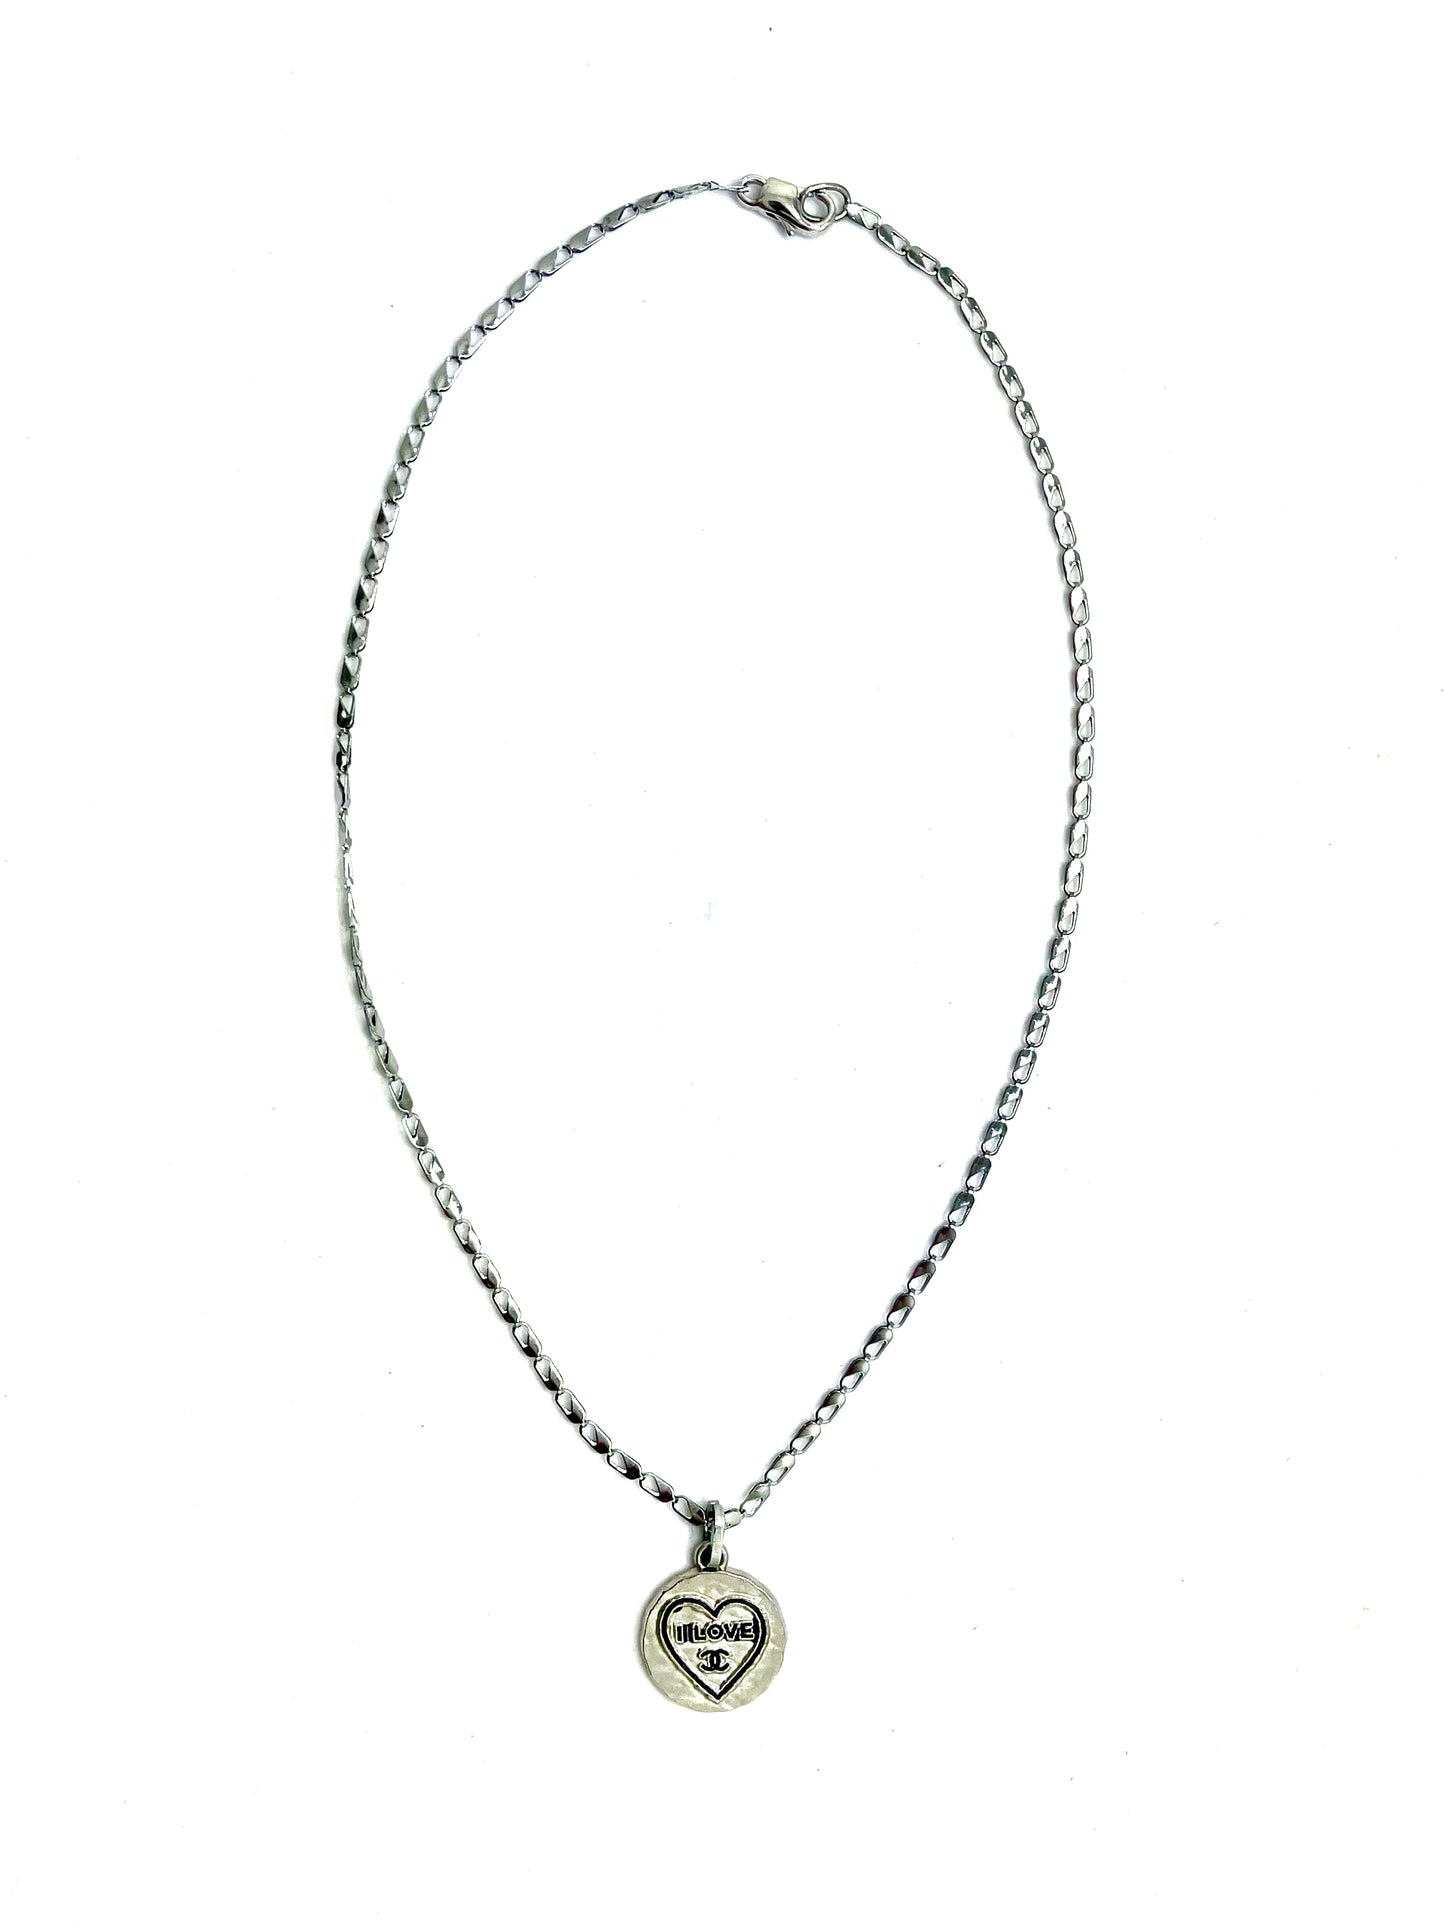 Vintage CC Love Medal Necklace